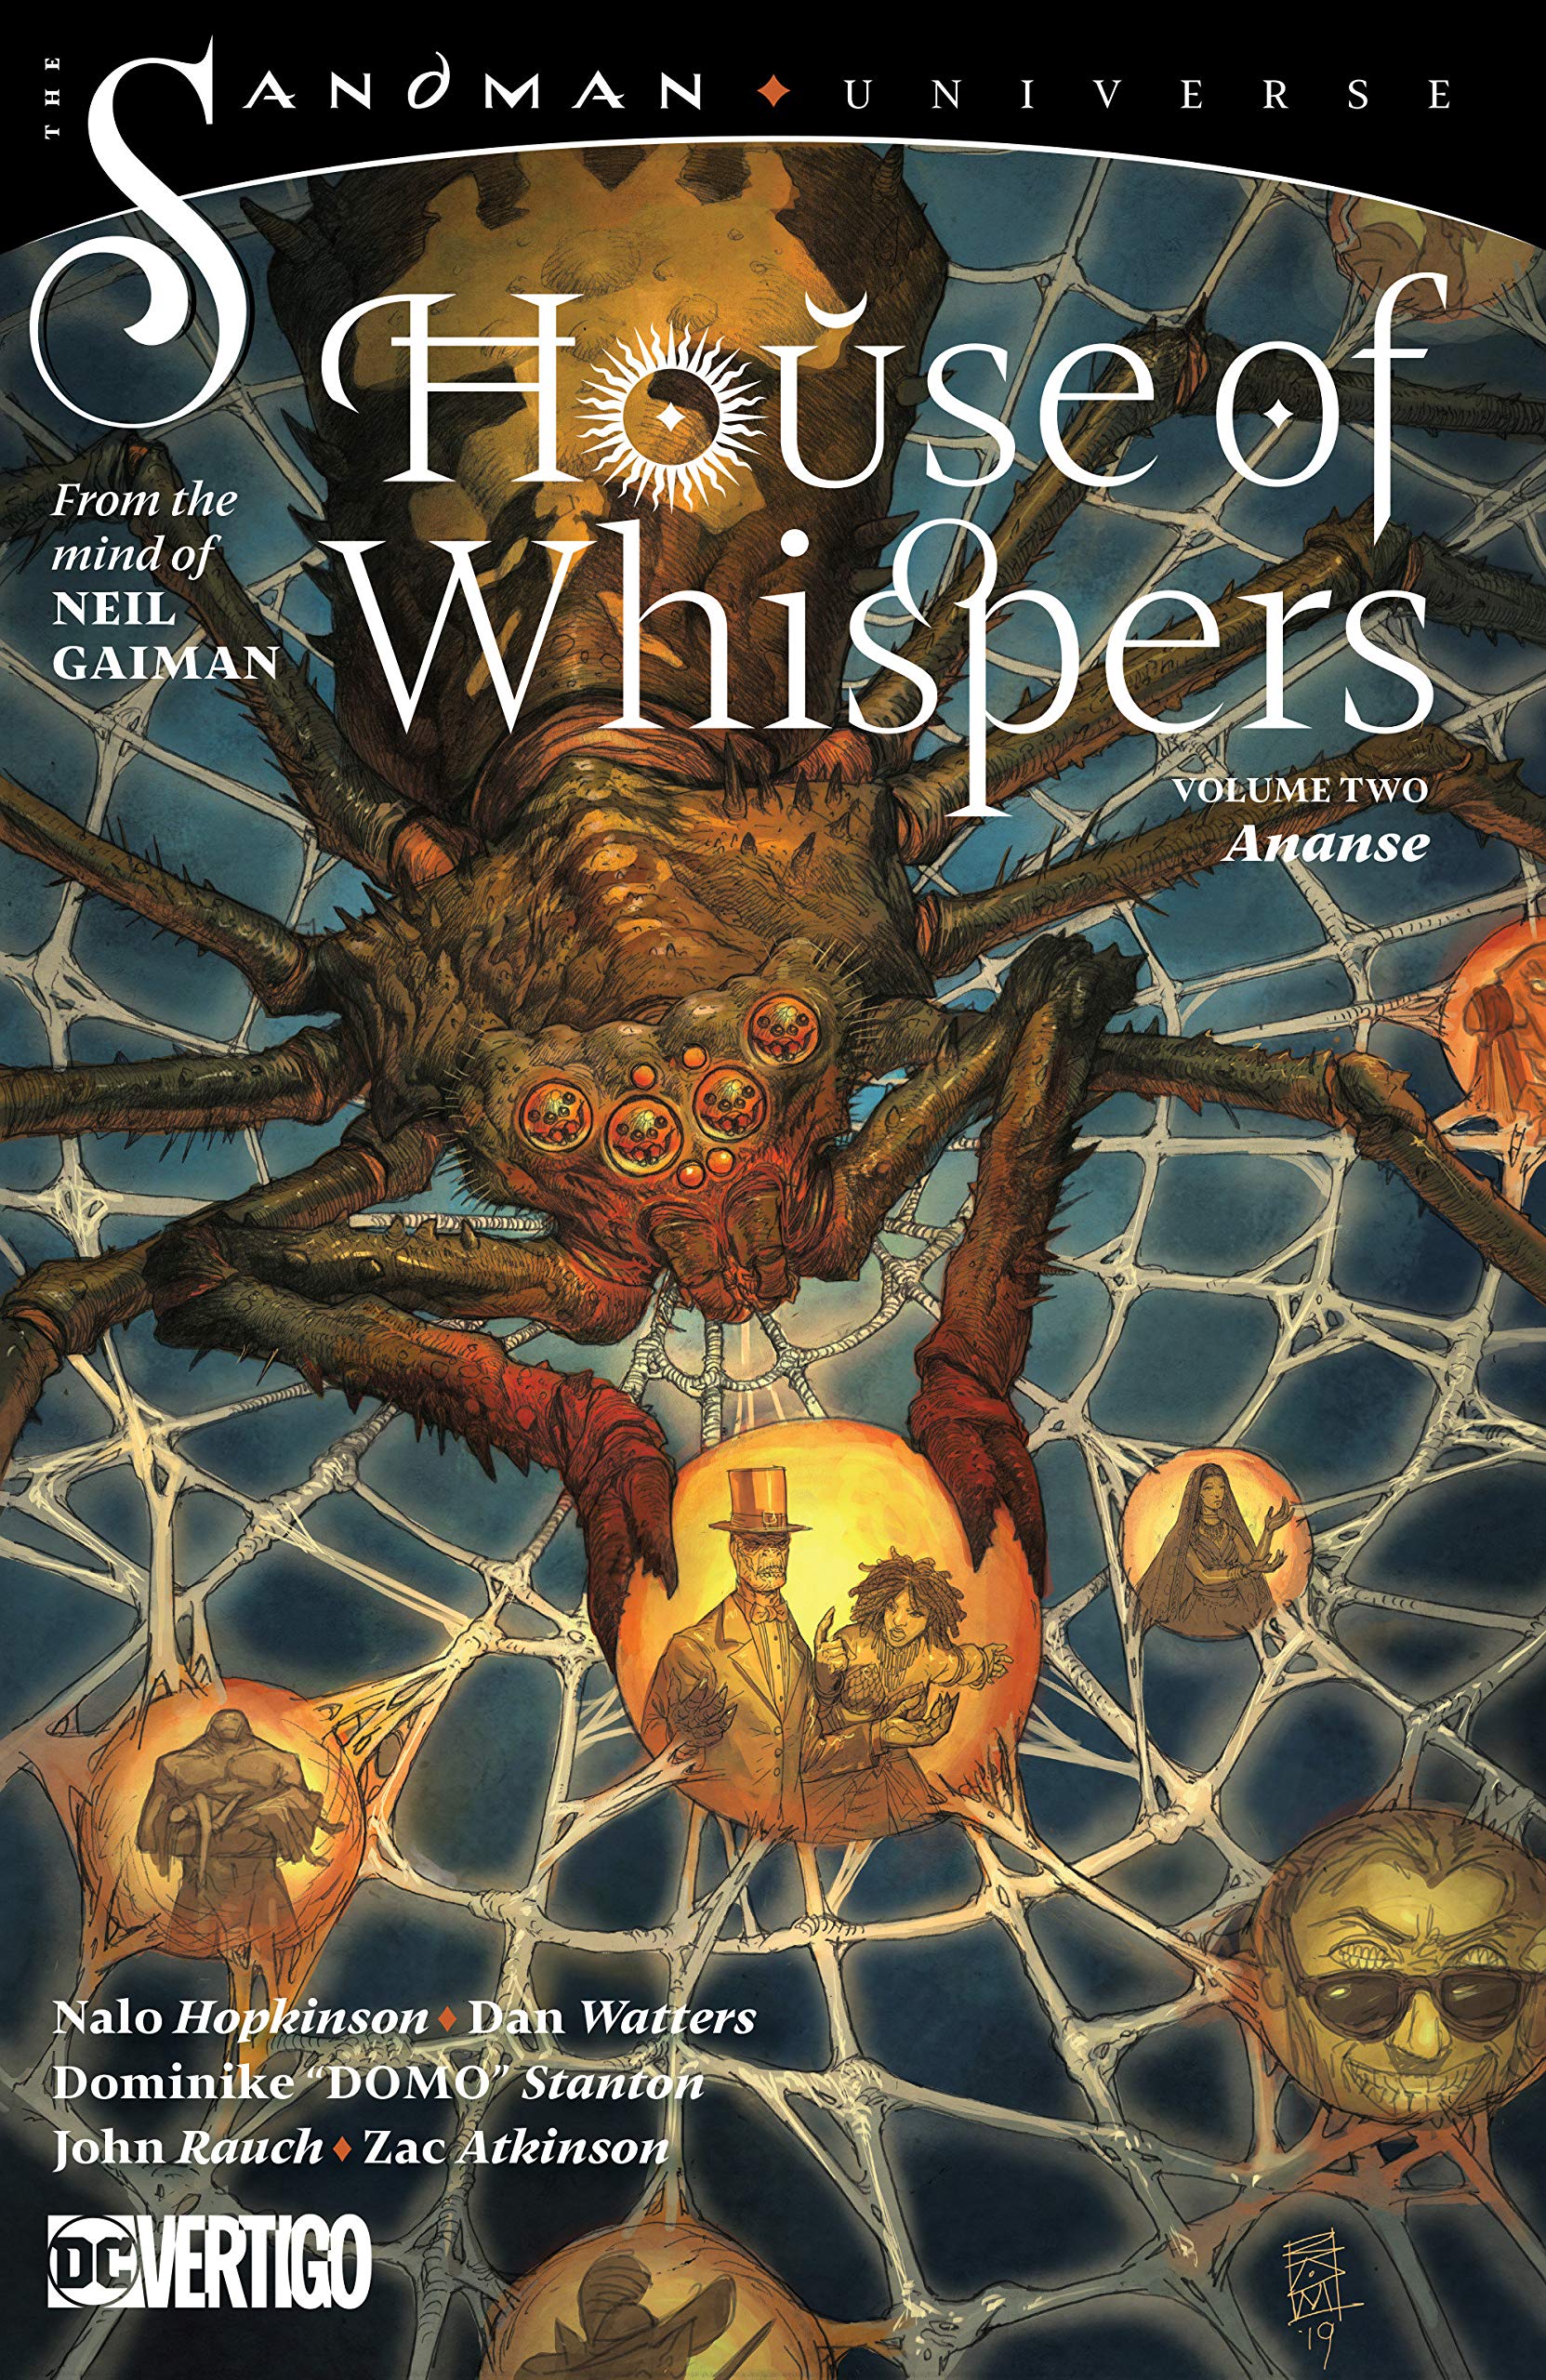 Nalo Hopkinson, Dan Watters, Neil Gaiman, Dominke Stanton: House of Whispers Vol. 2 (GraphicNovel, 2020, DC Comics)